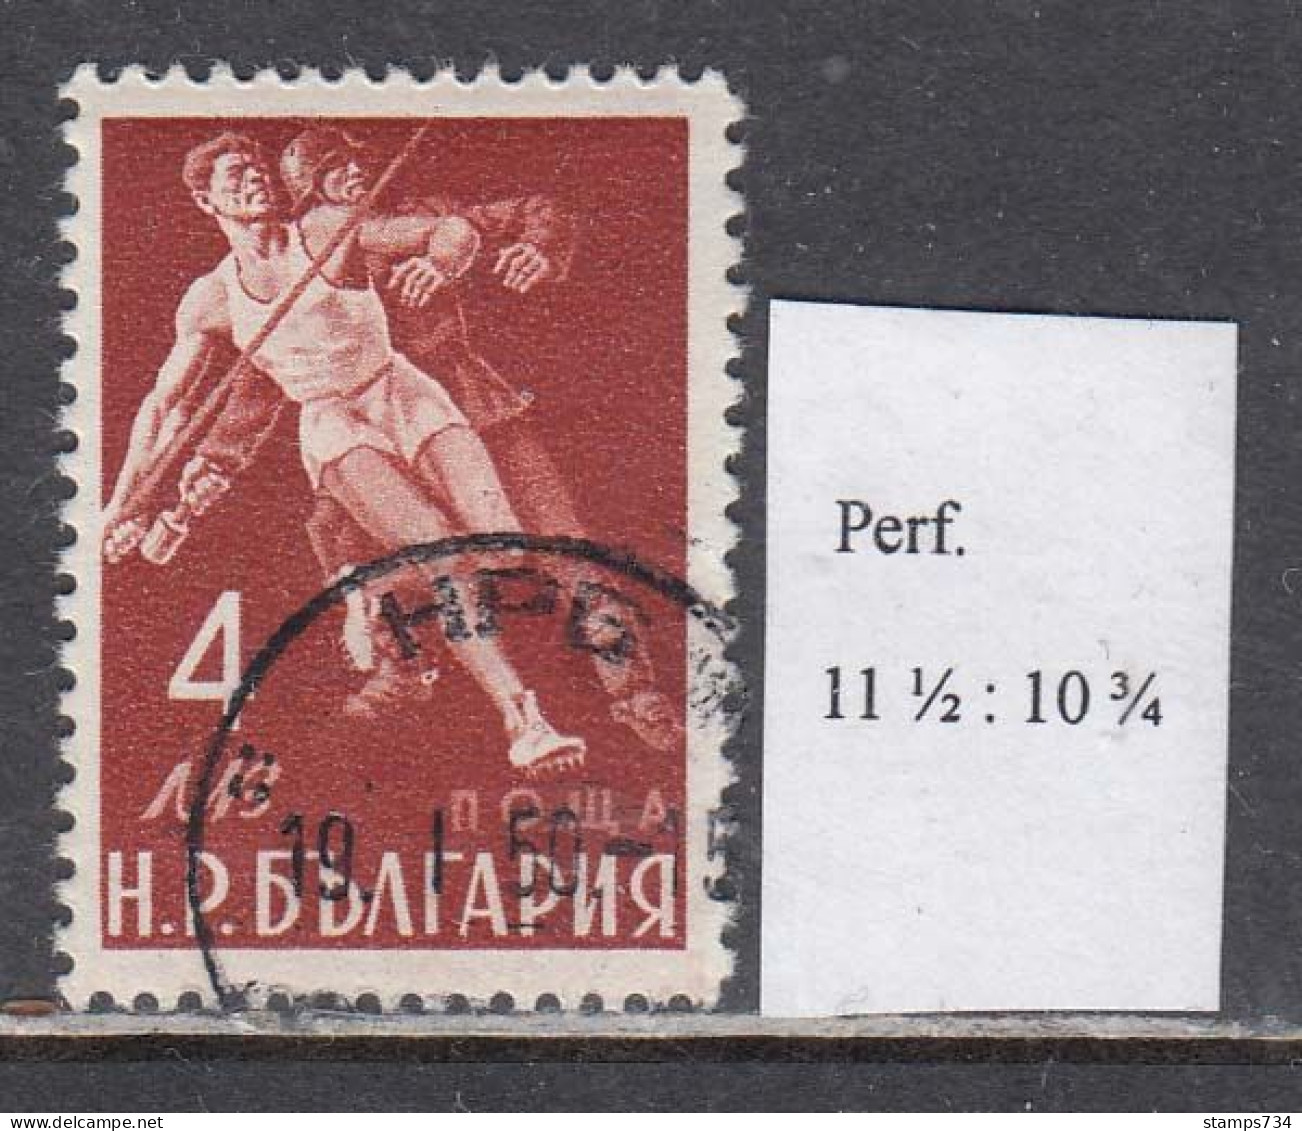 Bulgaria 1949 - Sport 4 Lev, Mi-Nr. 704, Rare Preforation 11 1/2: 10 3/4, Used - Usados